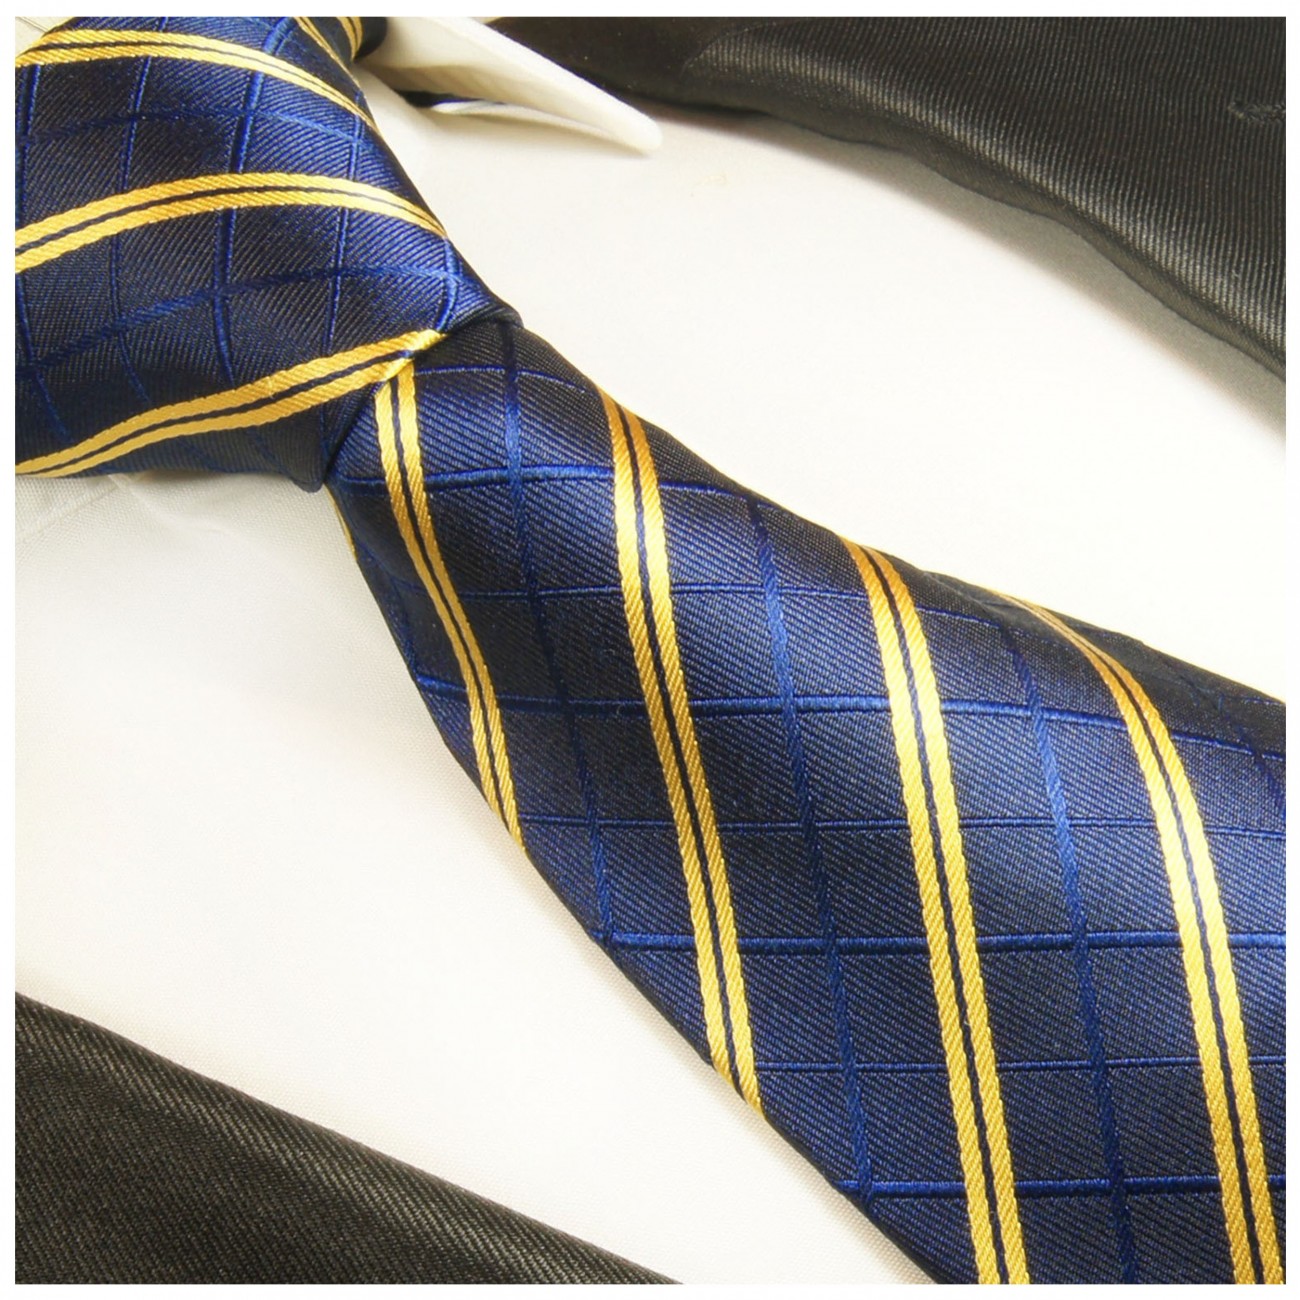 Krawatte blau gelb gestreift 2021